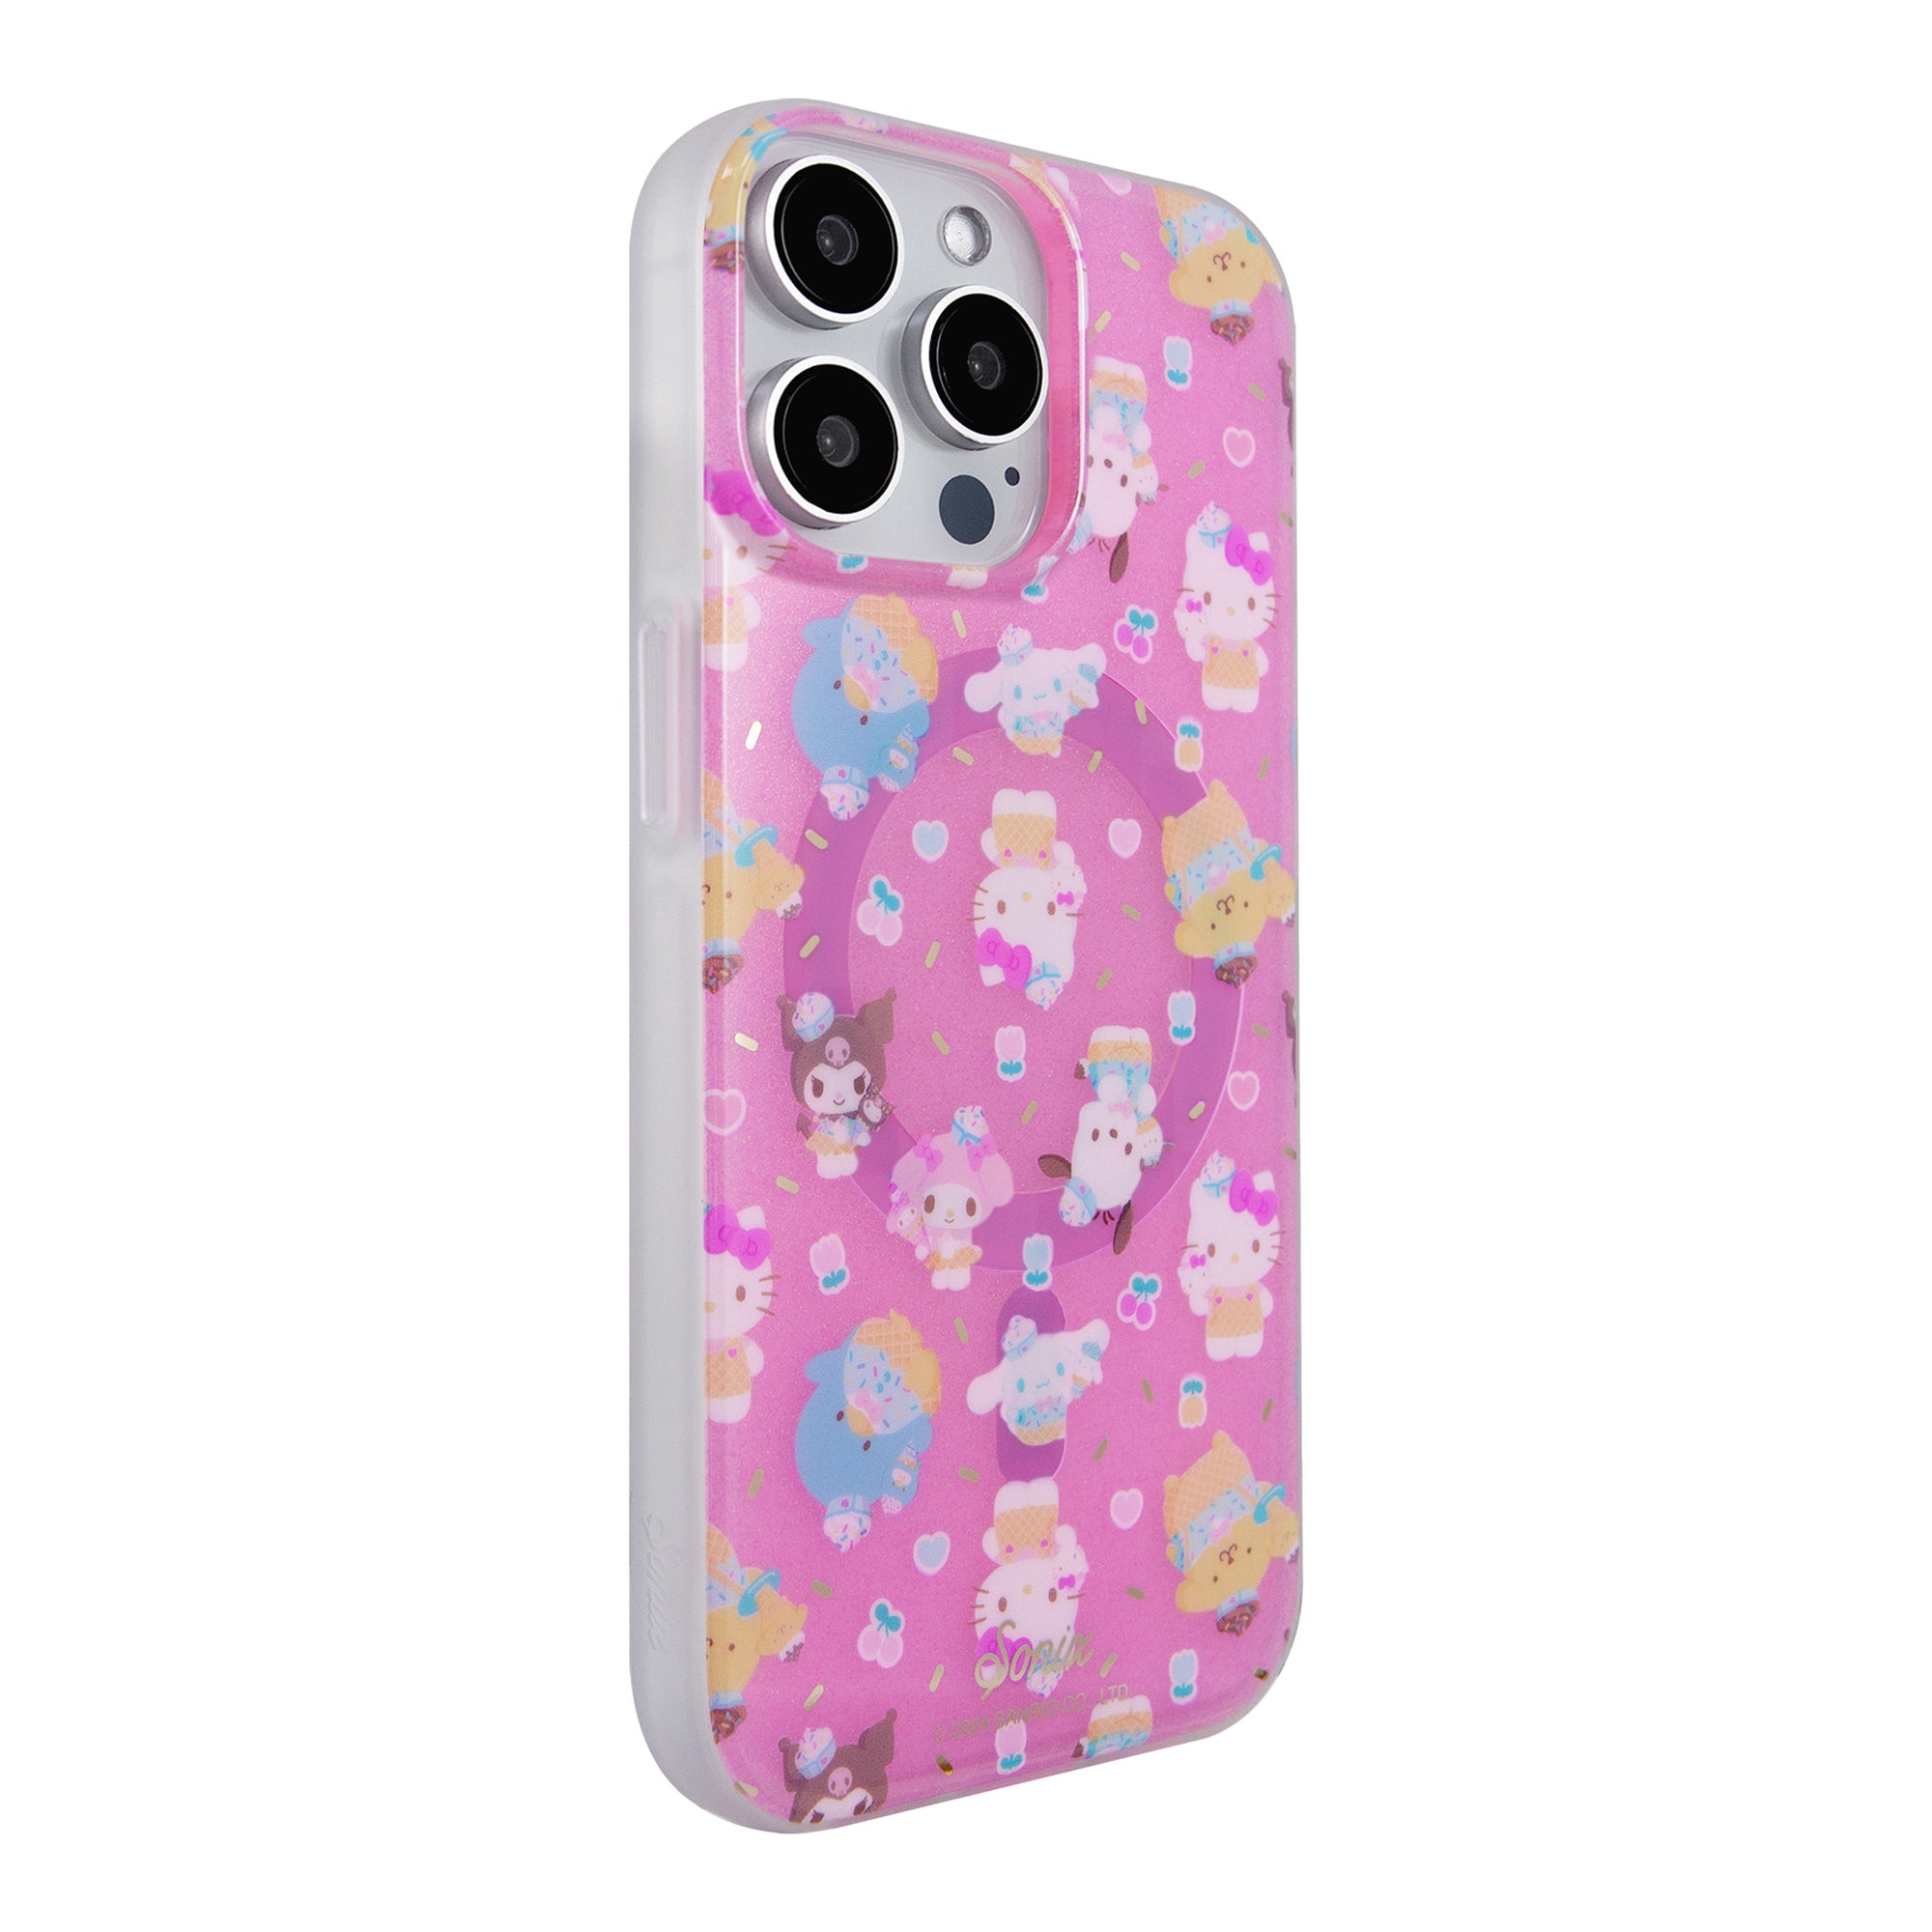 Hello Kitty and Friends x Sonix Ice Cream iPhone Case Accessory BySonix Inc.   